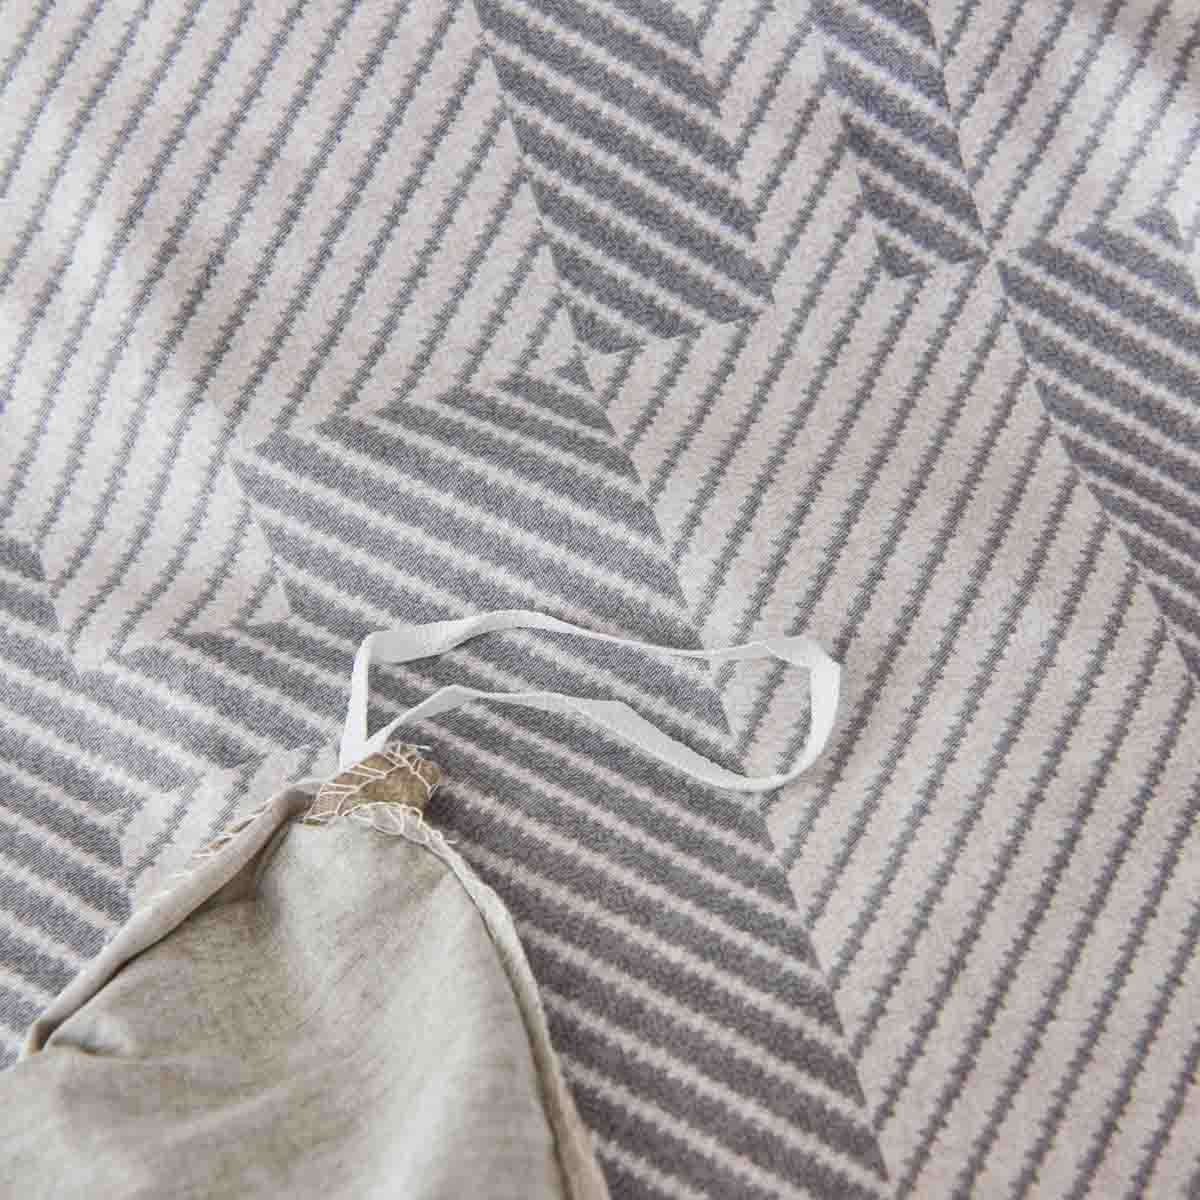 Castor Pattern Cotton Fitted Sheet Set